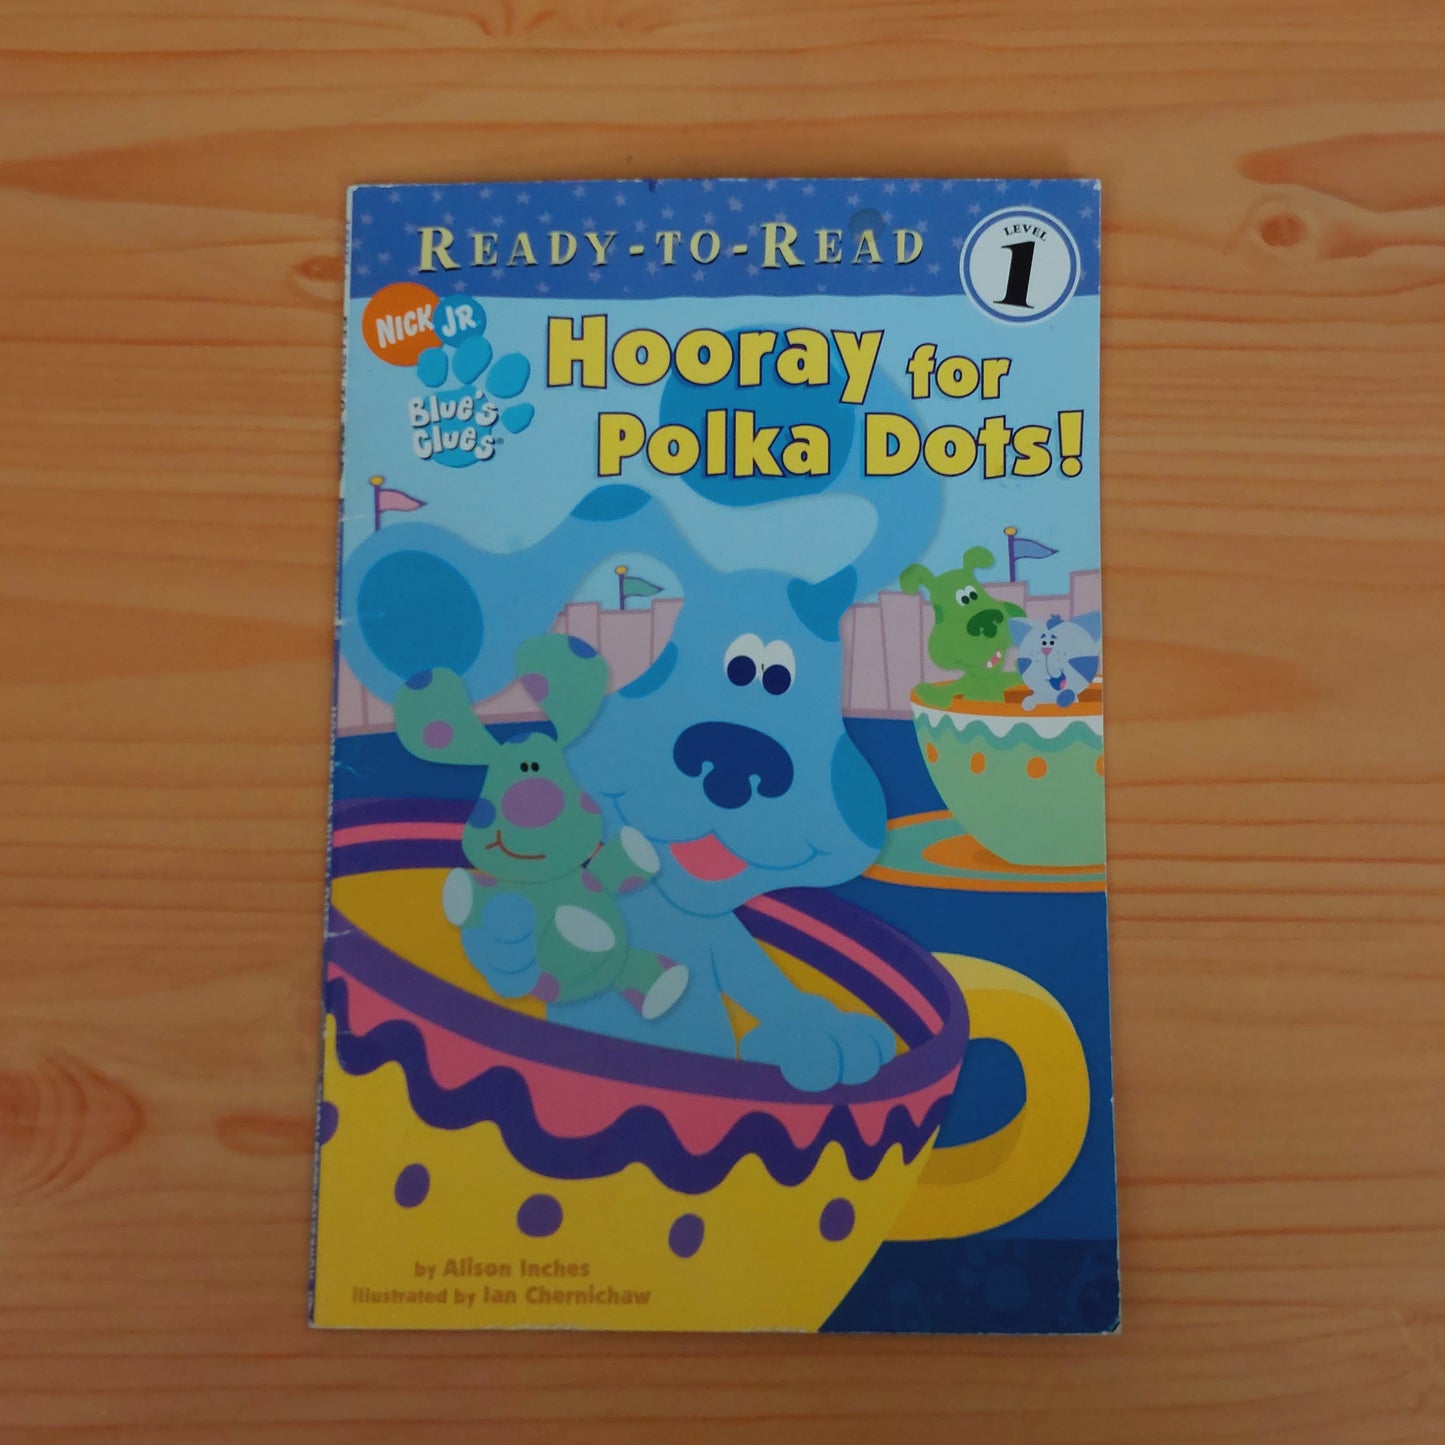 Ready-to-Read: Level 1 - Blue's Clues: Hooray for Polka Dots!